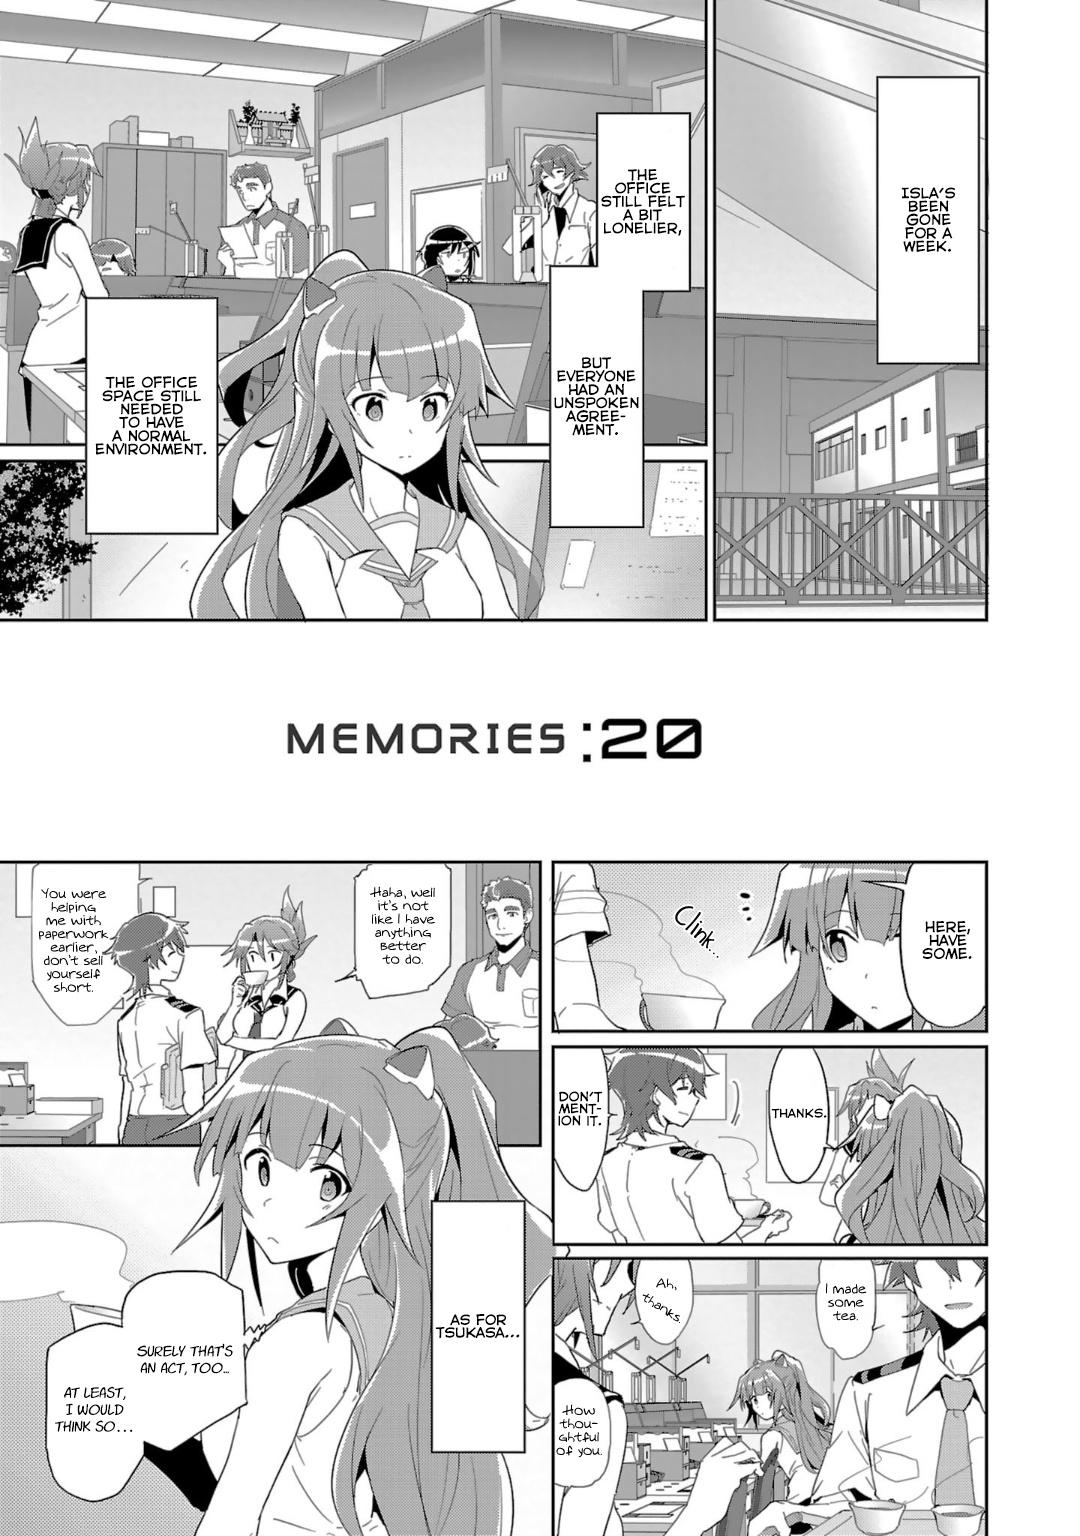 Read Plastic Memories - Say To Good-Bye Vol.3 Chapter 17: Memories: 17 on  Mangakakalot